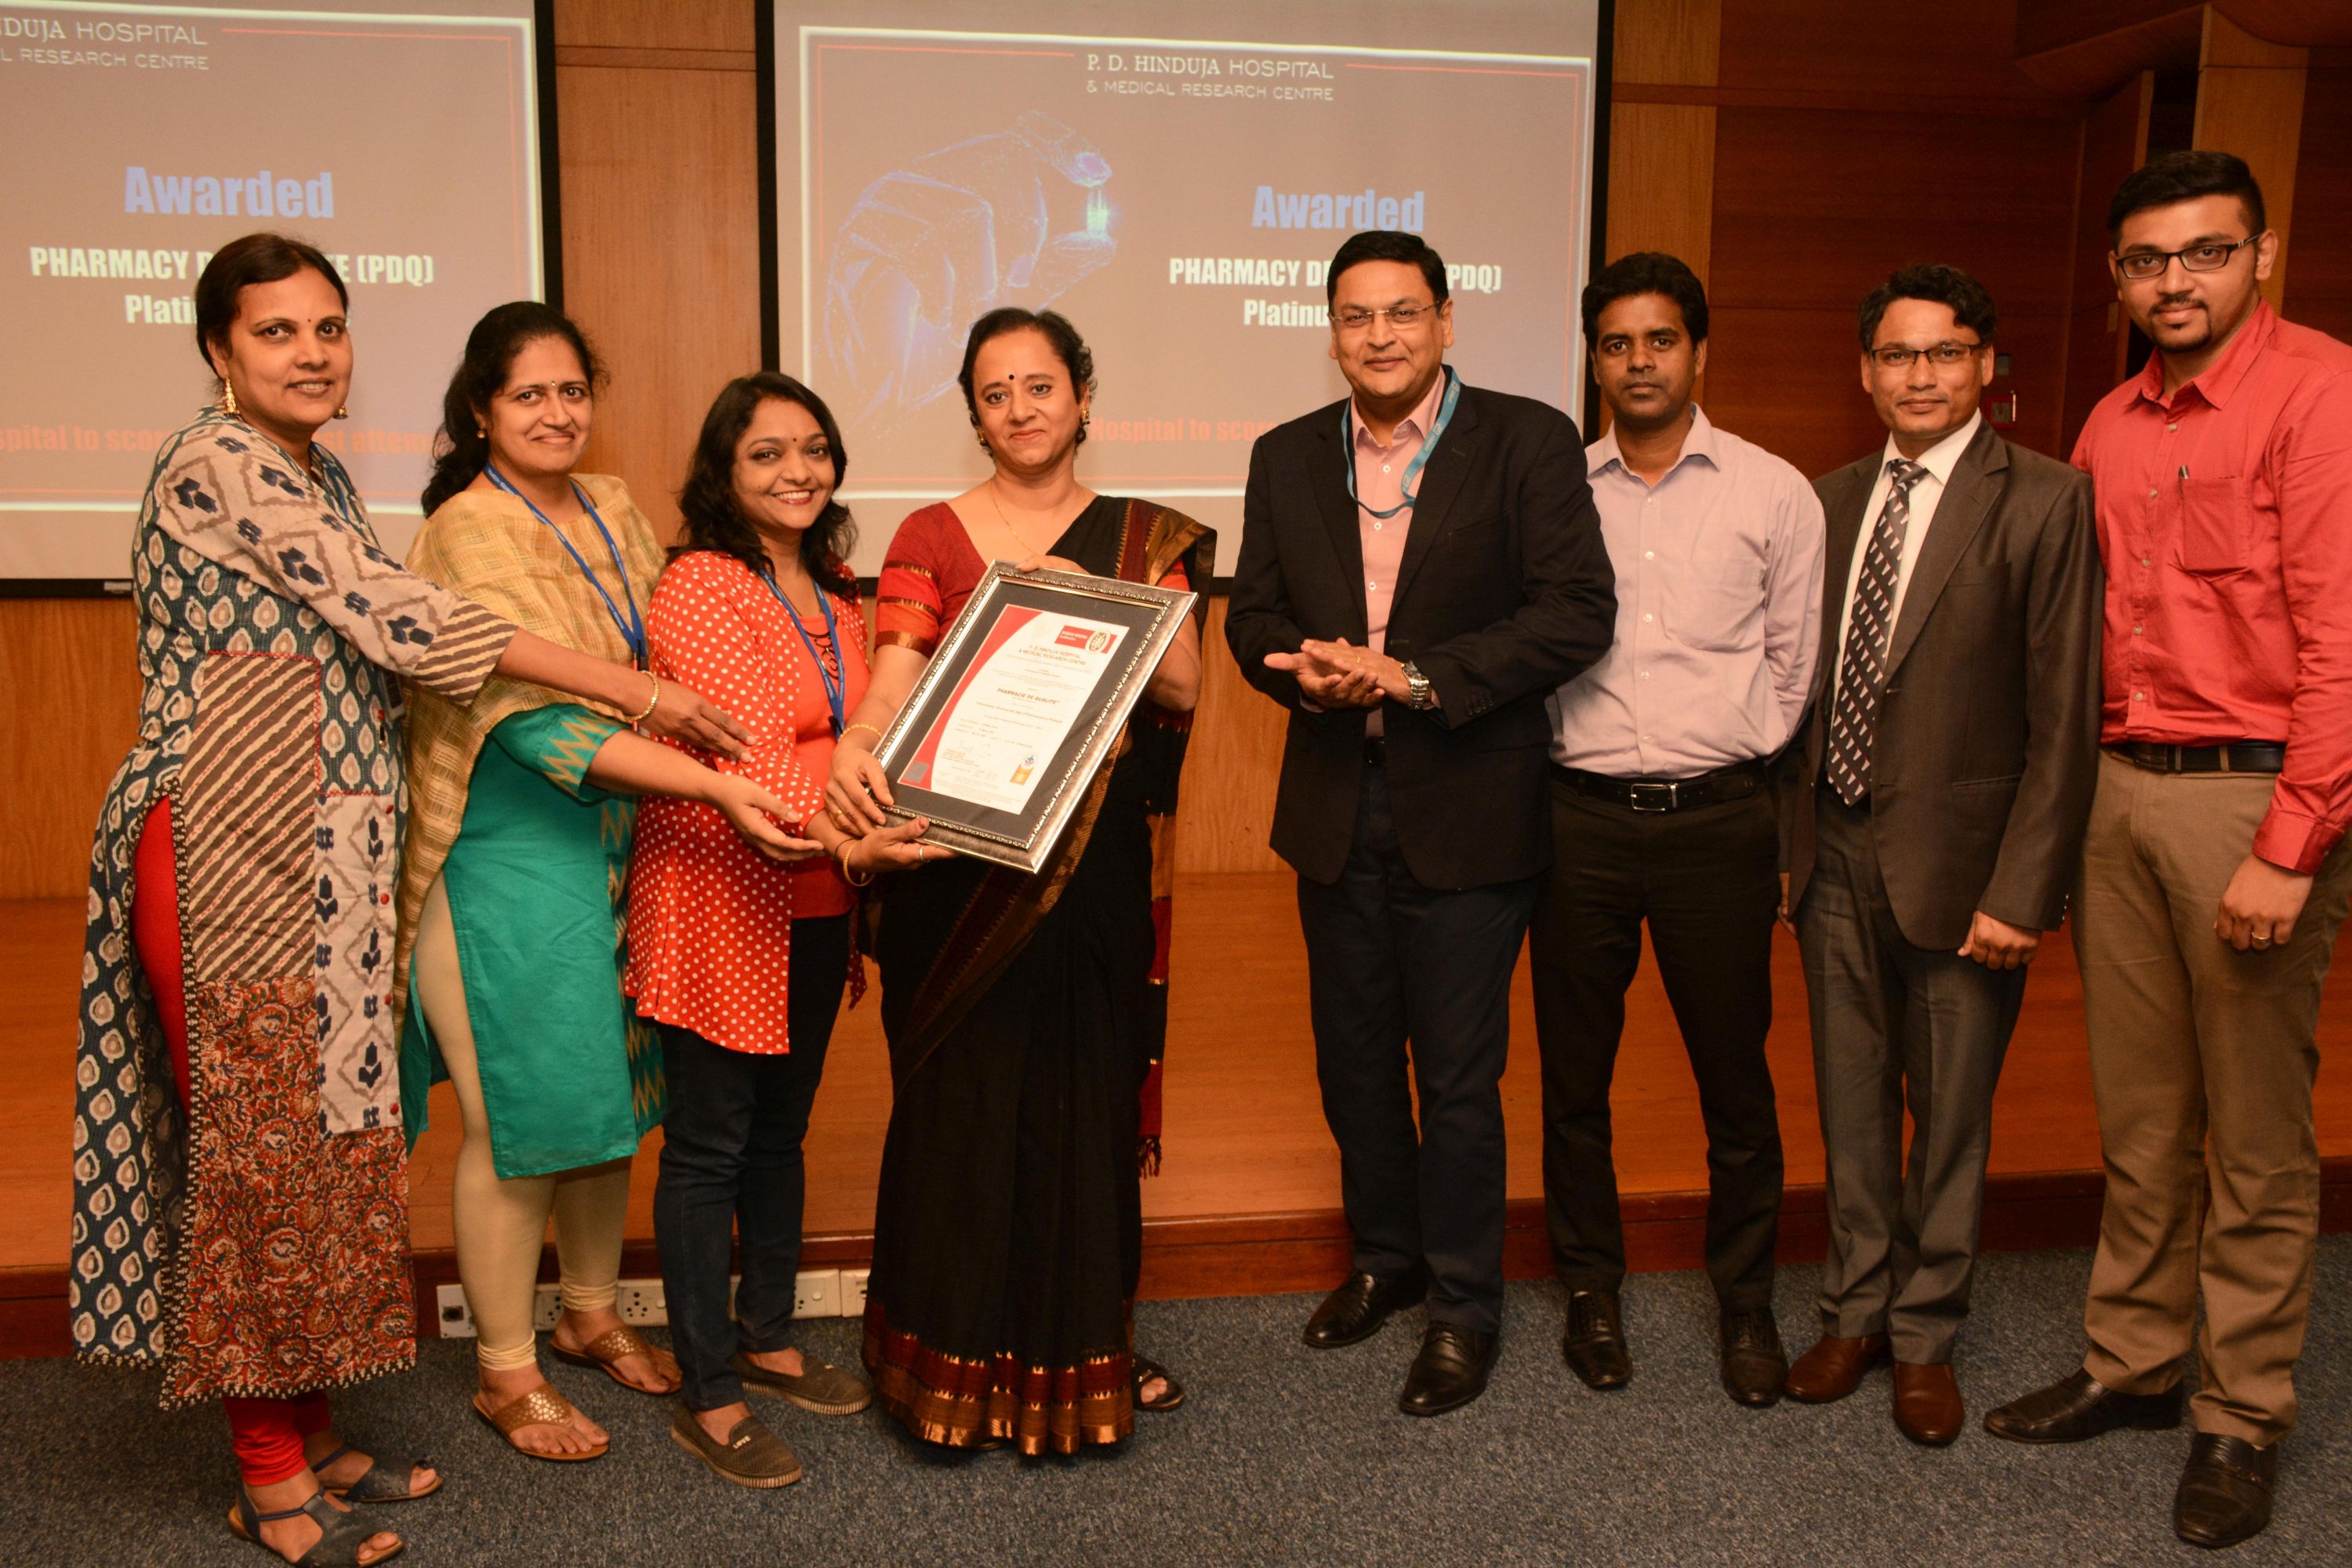 1565102735034_Hinduja Awarded a Pharmacy award